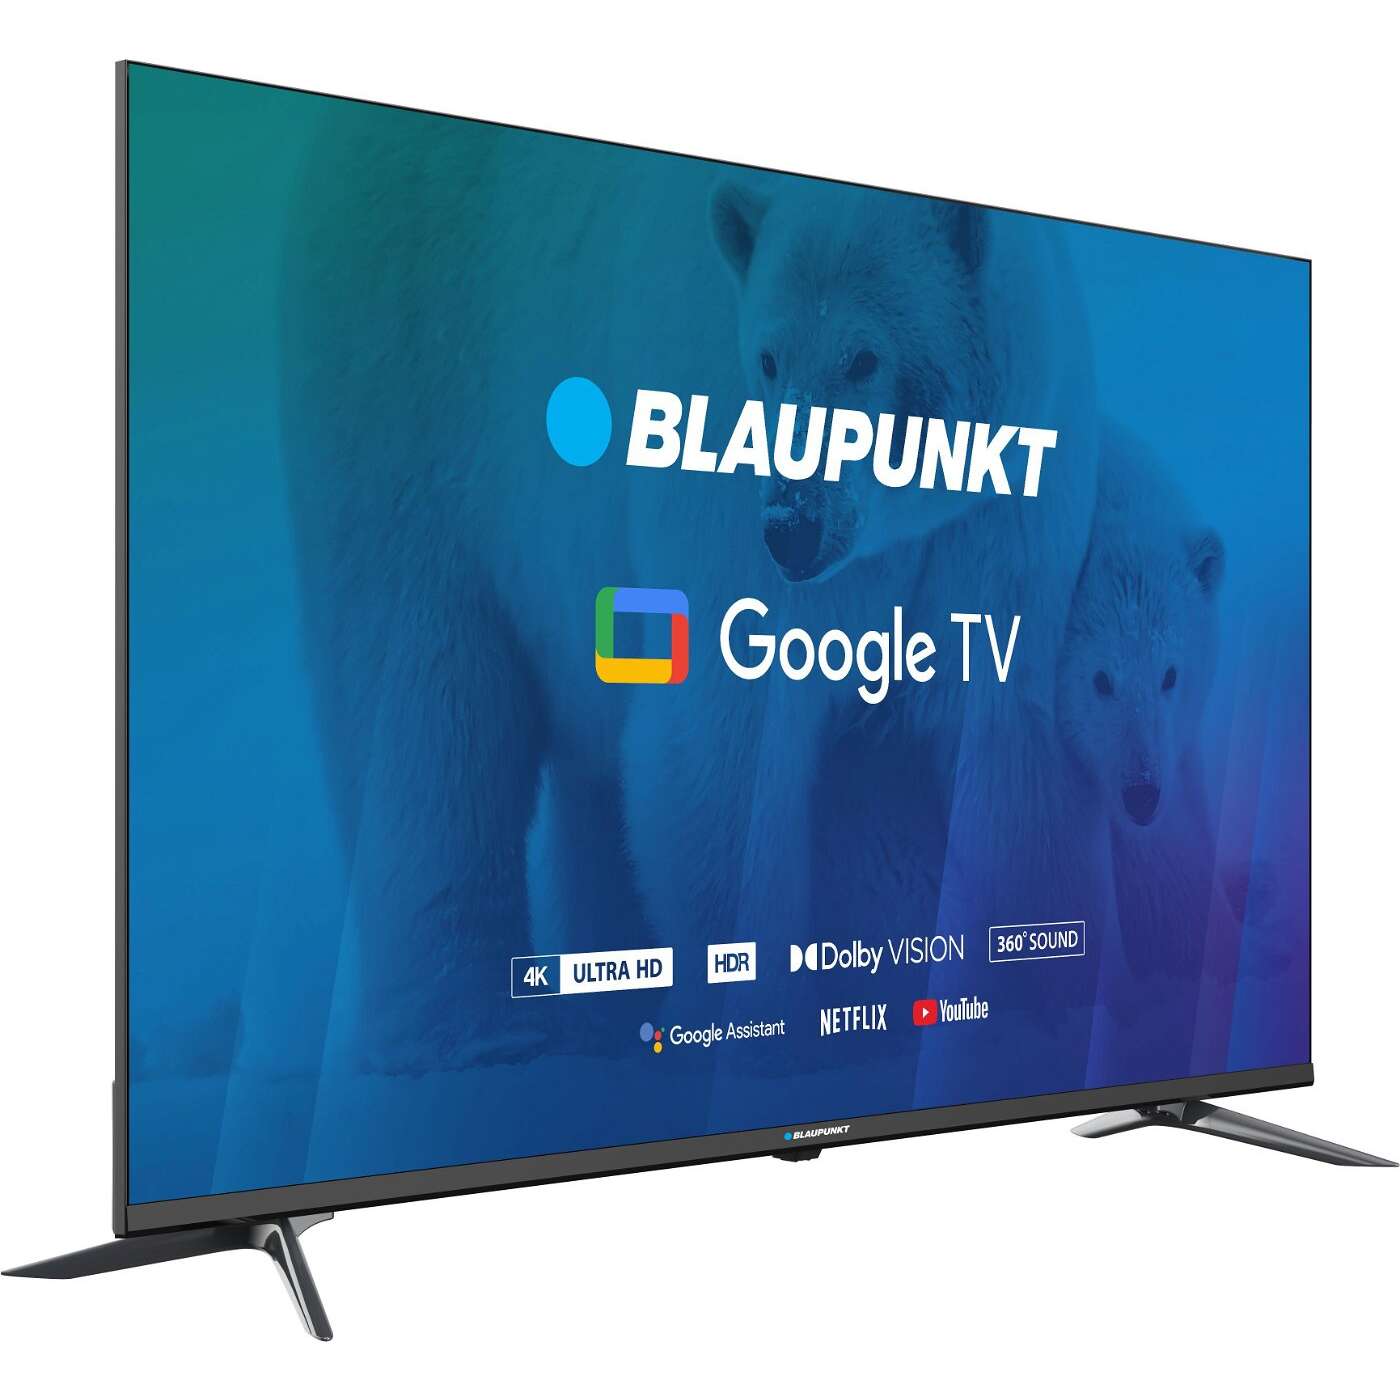 Blaupunkt 55ugc6000 55" 4k uhd smart led tv (55ugc6000)